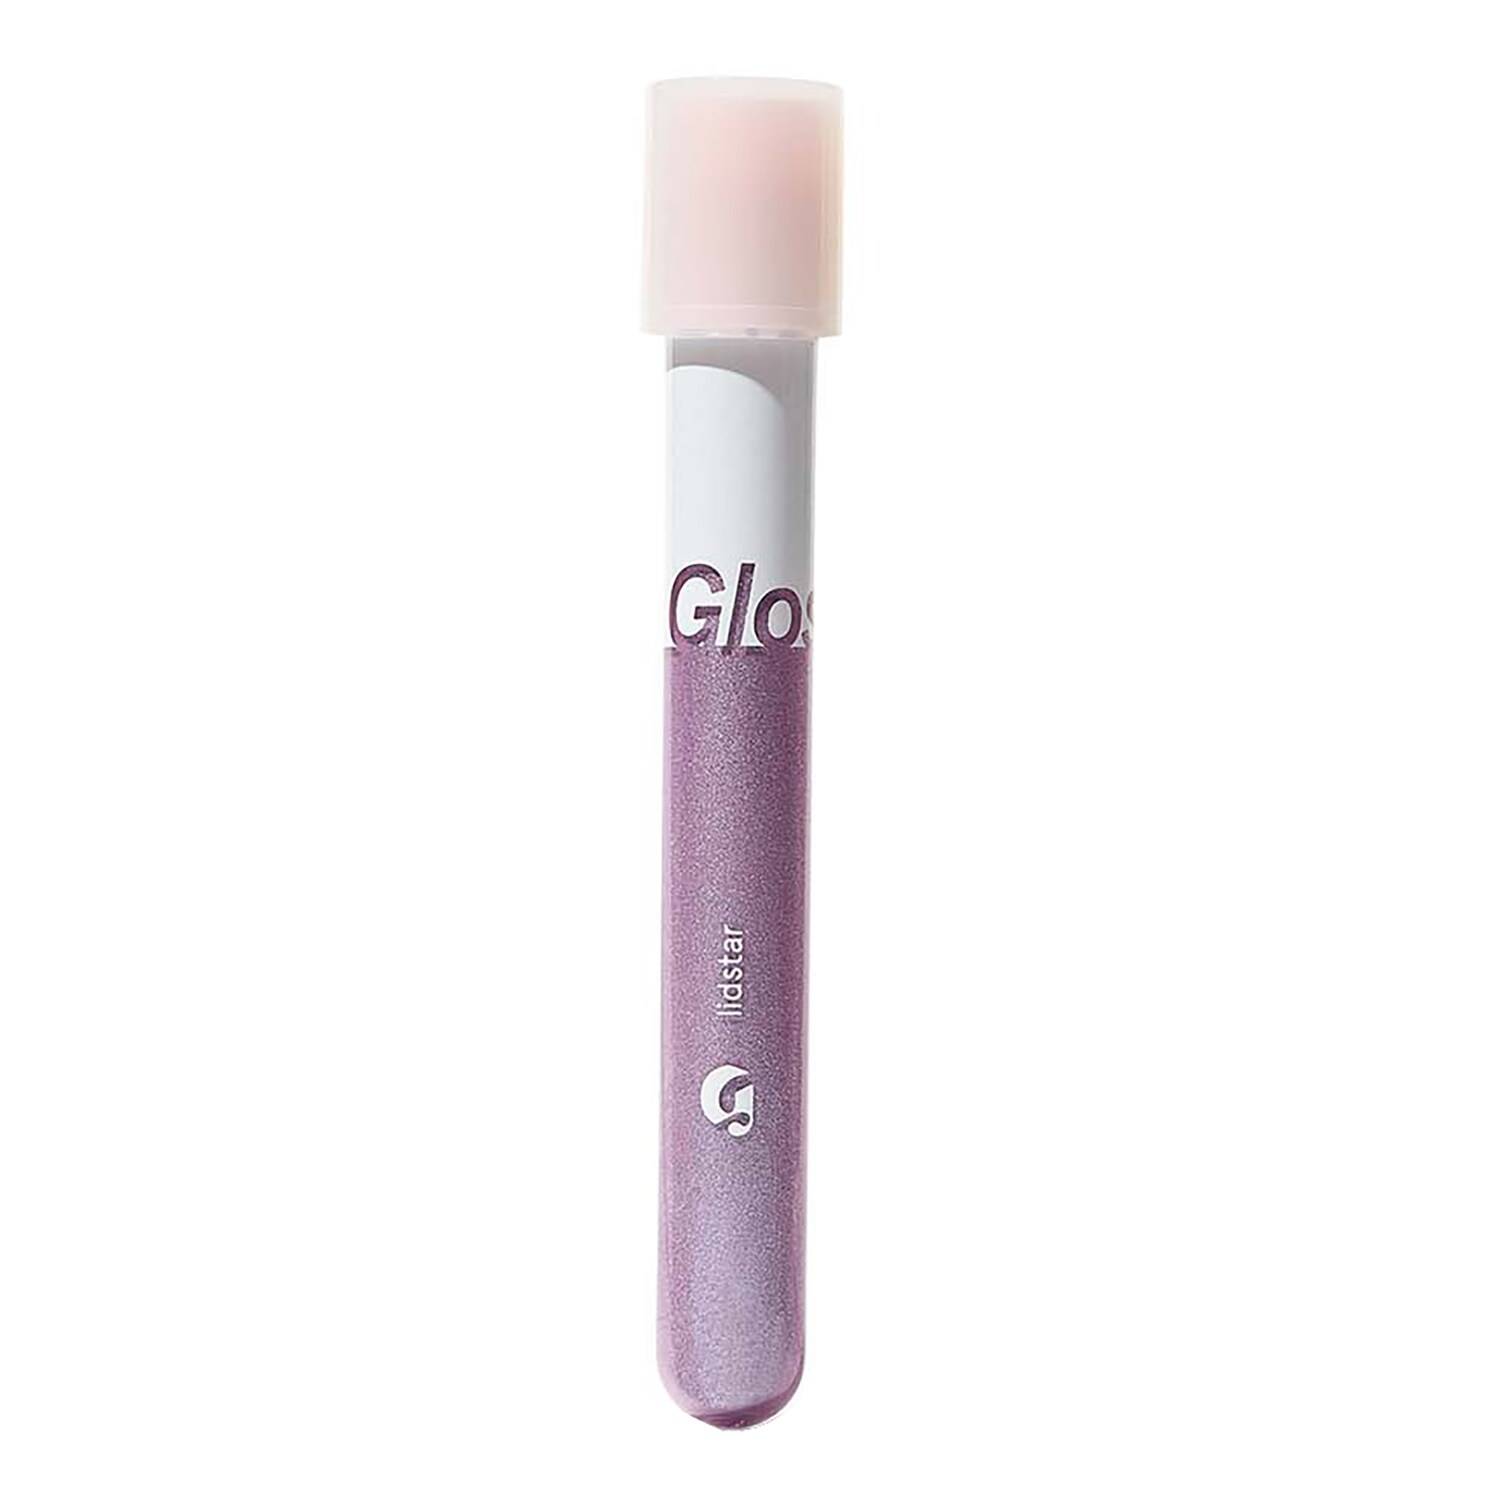 Glossier Lidstar Long-Wearing Shimmer Cream Eyeshadow 4.5Ml Lily